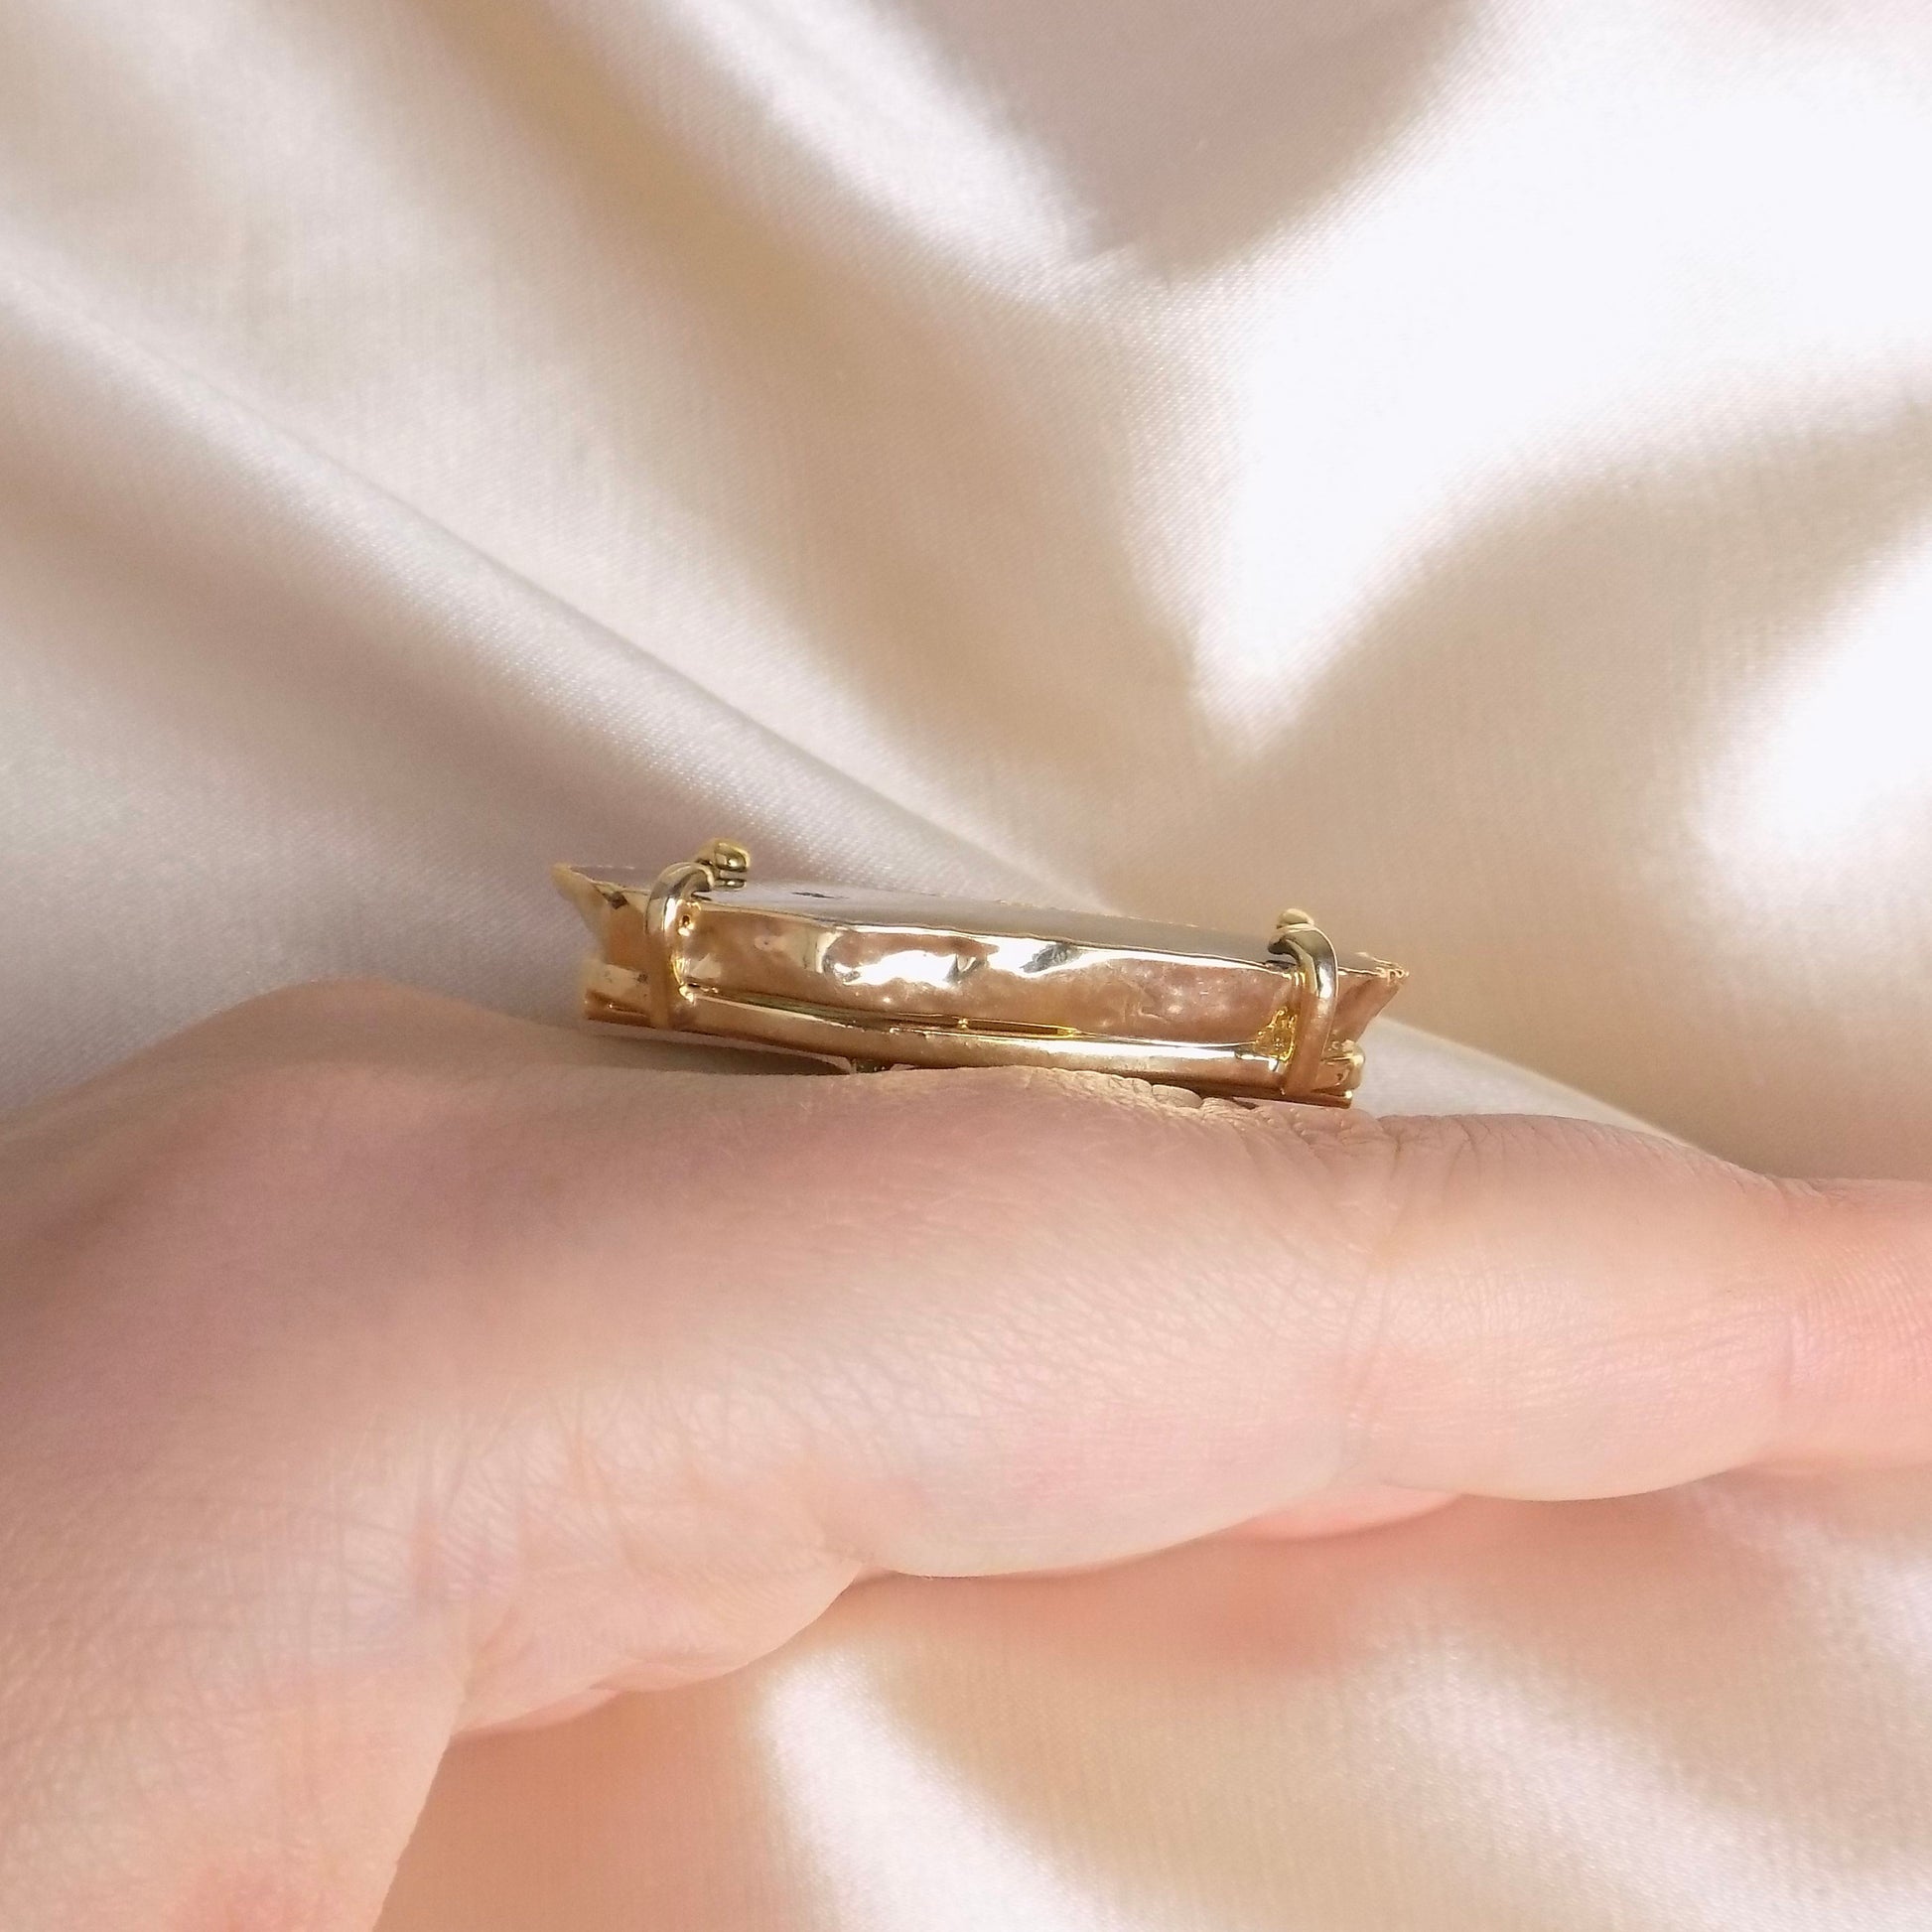 Green Agate Slice Ring Statement, Boho Large Geode Ring, Raw Crystal Ring Gold Adjustable, G15-81